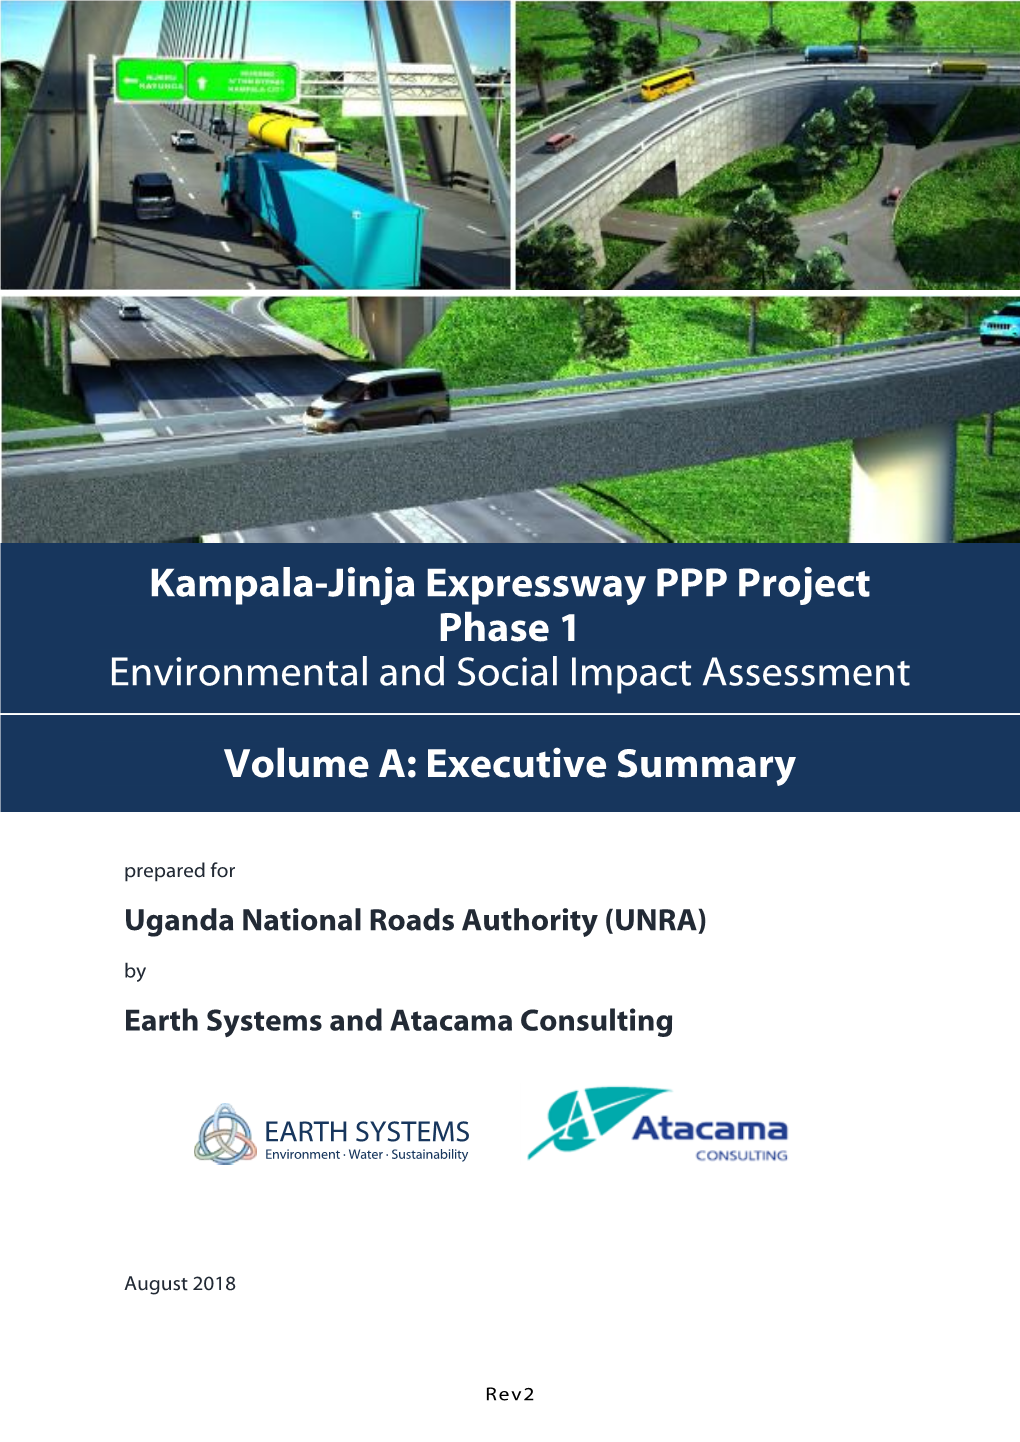 Kampala-Jinja Expressway PPP Project Phase 1 Environmental and Social Impact Assessment